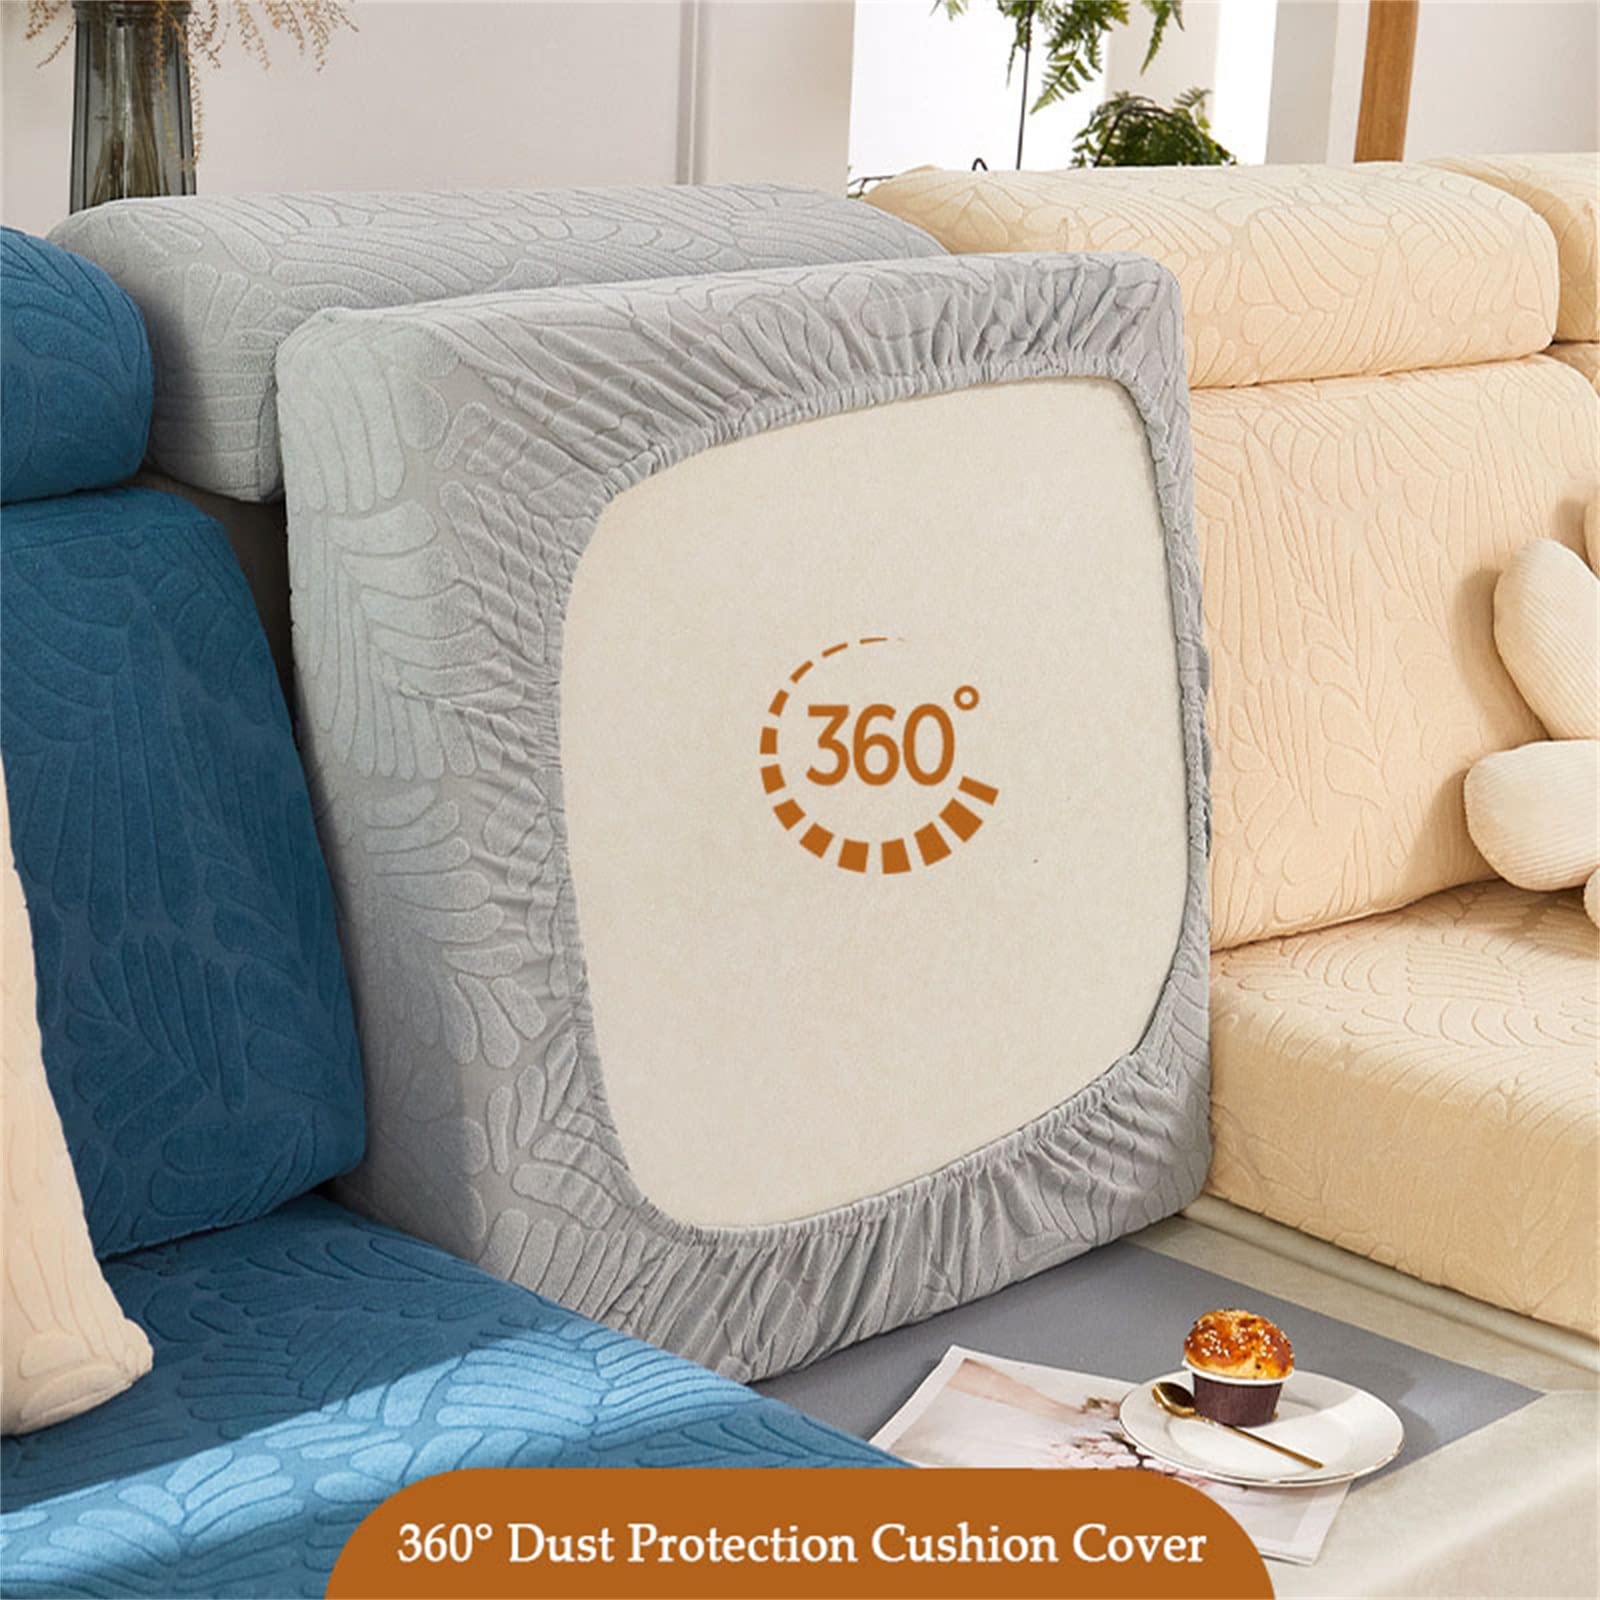 Magic Sofa Covers Classic，Super Stretch Sectional Geometrical Sofa Cover for Pet